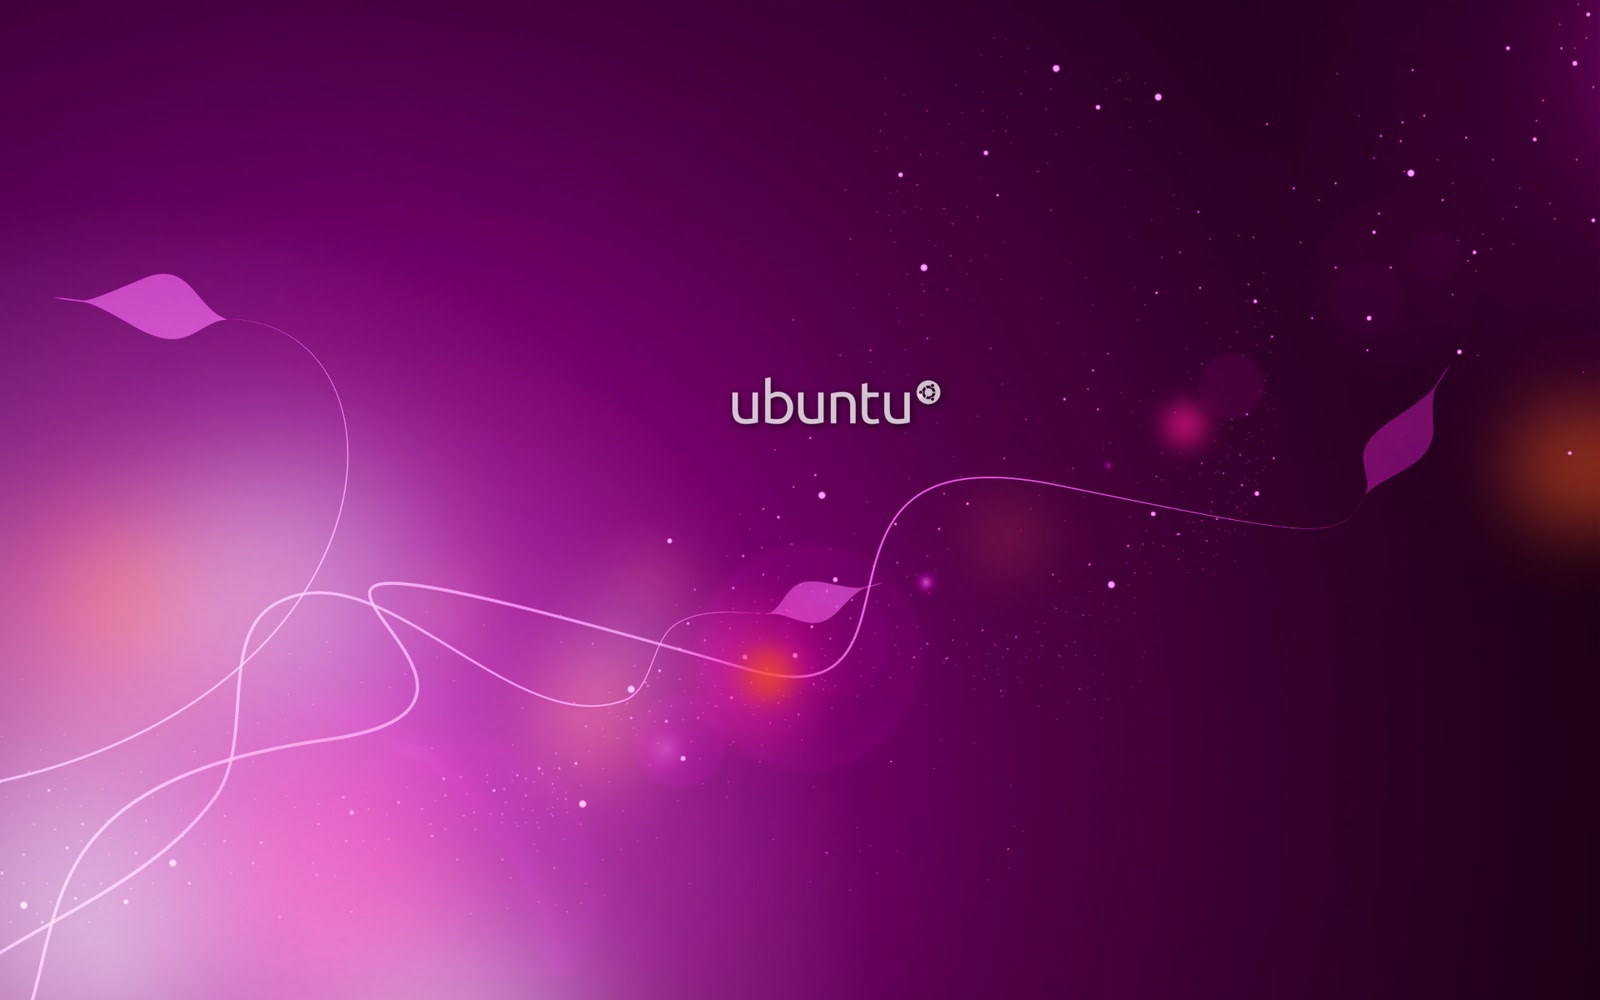 Wallpaper Ubuntu Entardecer Seu Reposit Rio